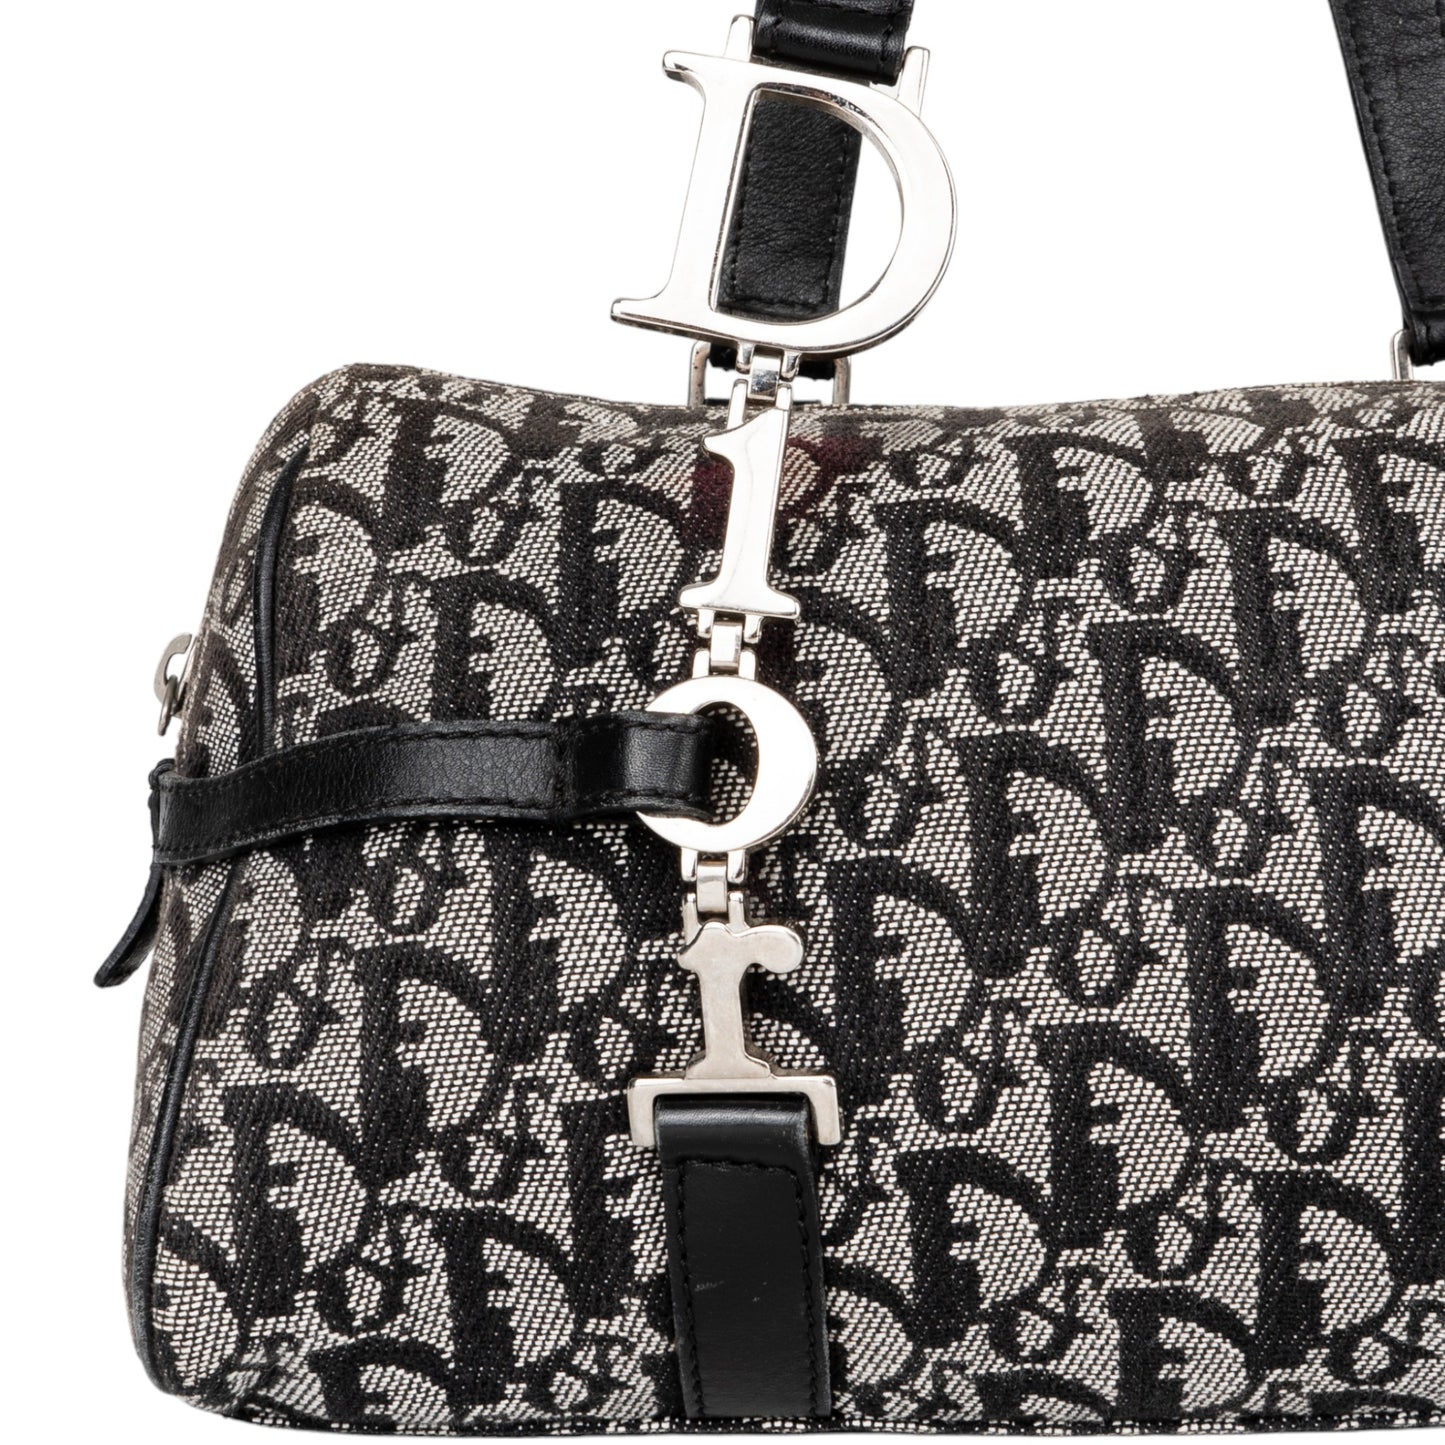 Christian Dior Charms Boston Monogram Shoulder Bag